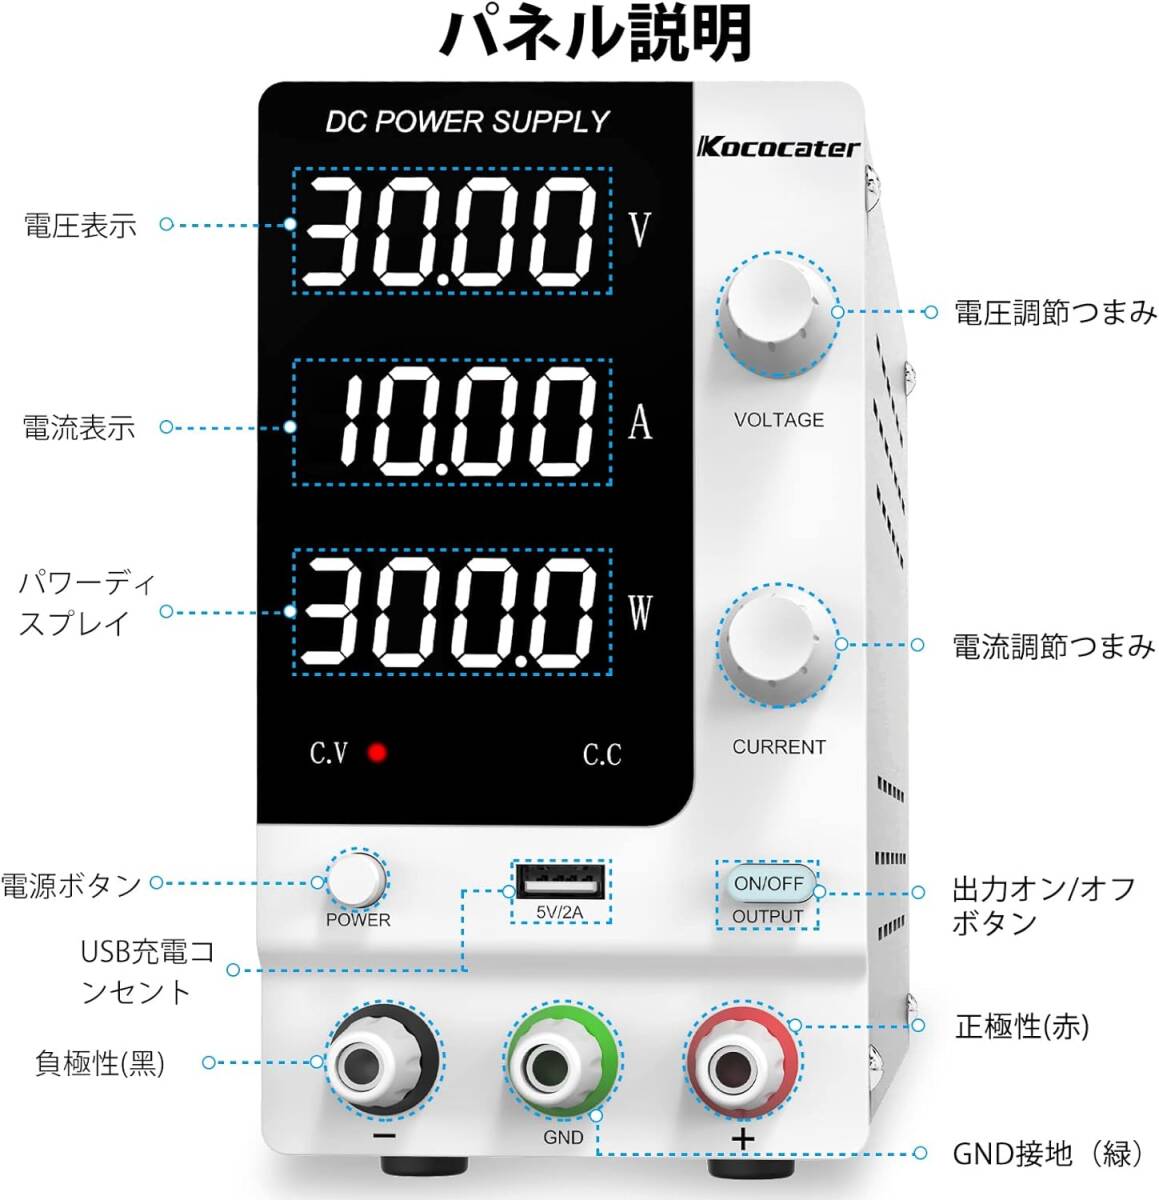 30V10A(ホワイト) IKococater 直流安定化電源 0-30V 0-10A 4桁電圧電流表示 可変直流電源 安全保護 _画像2